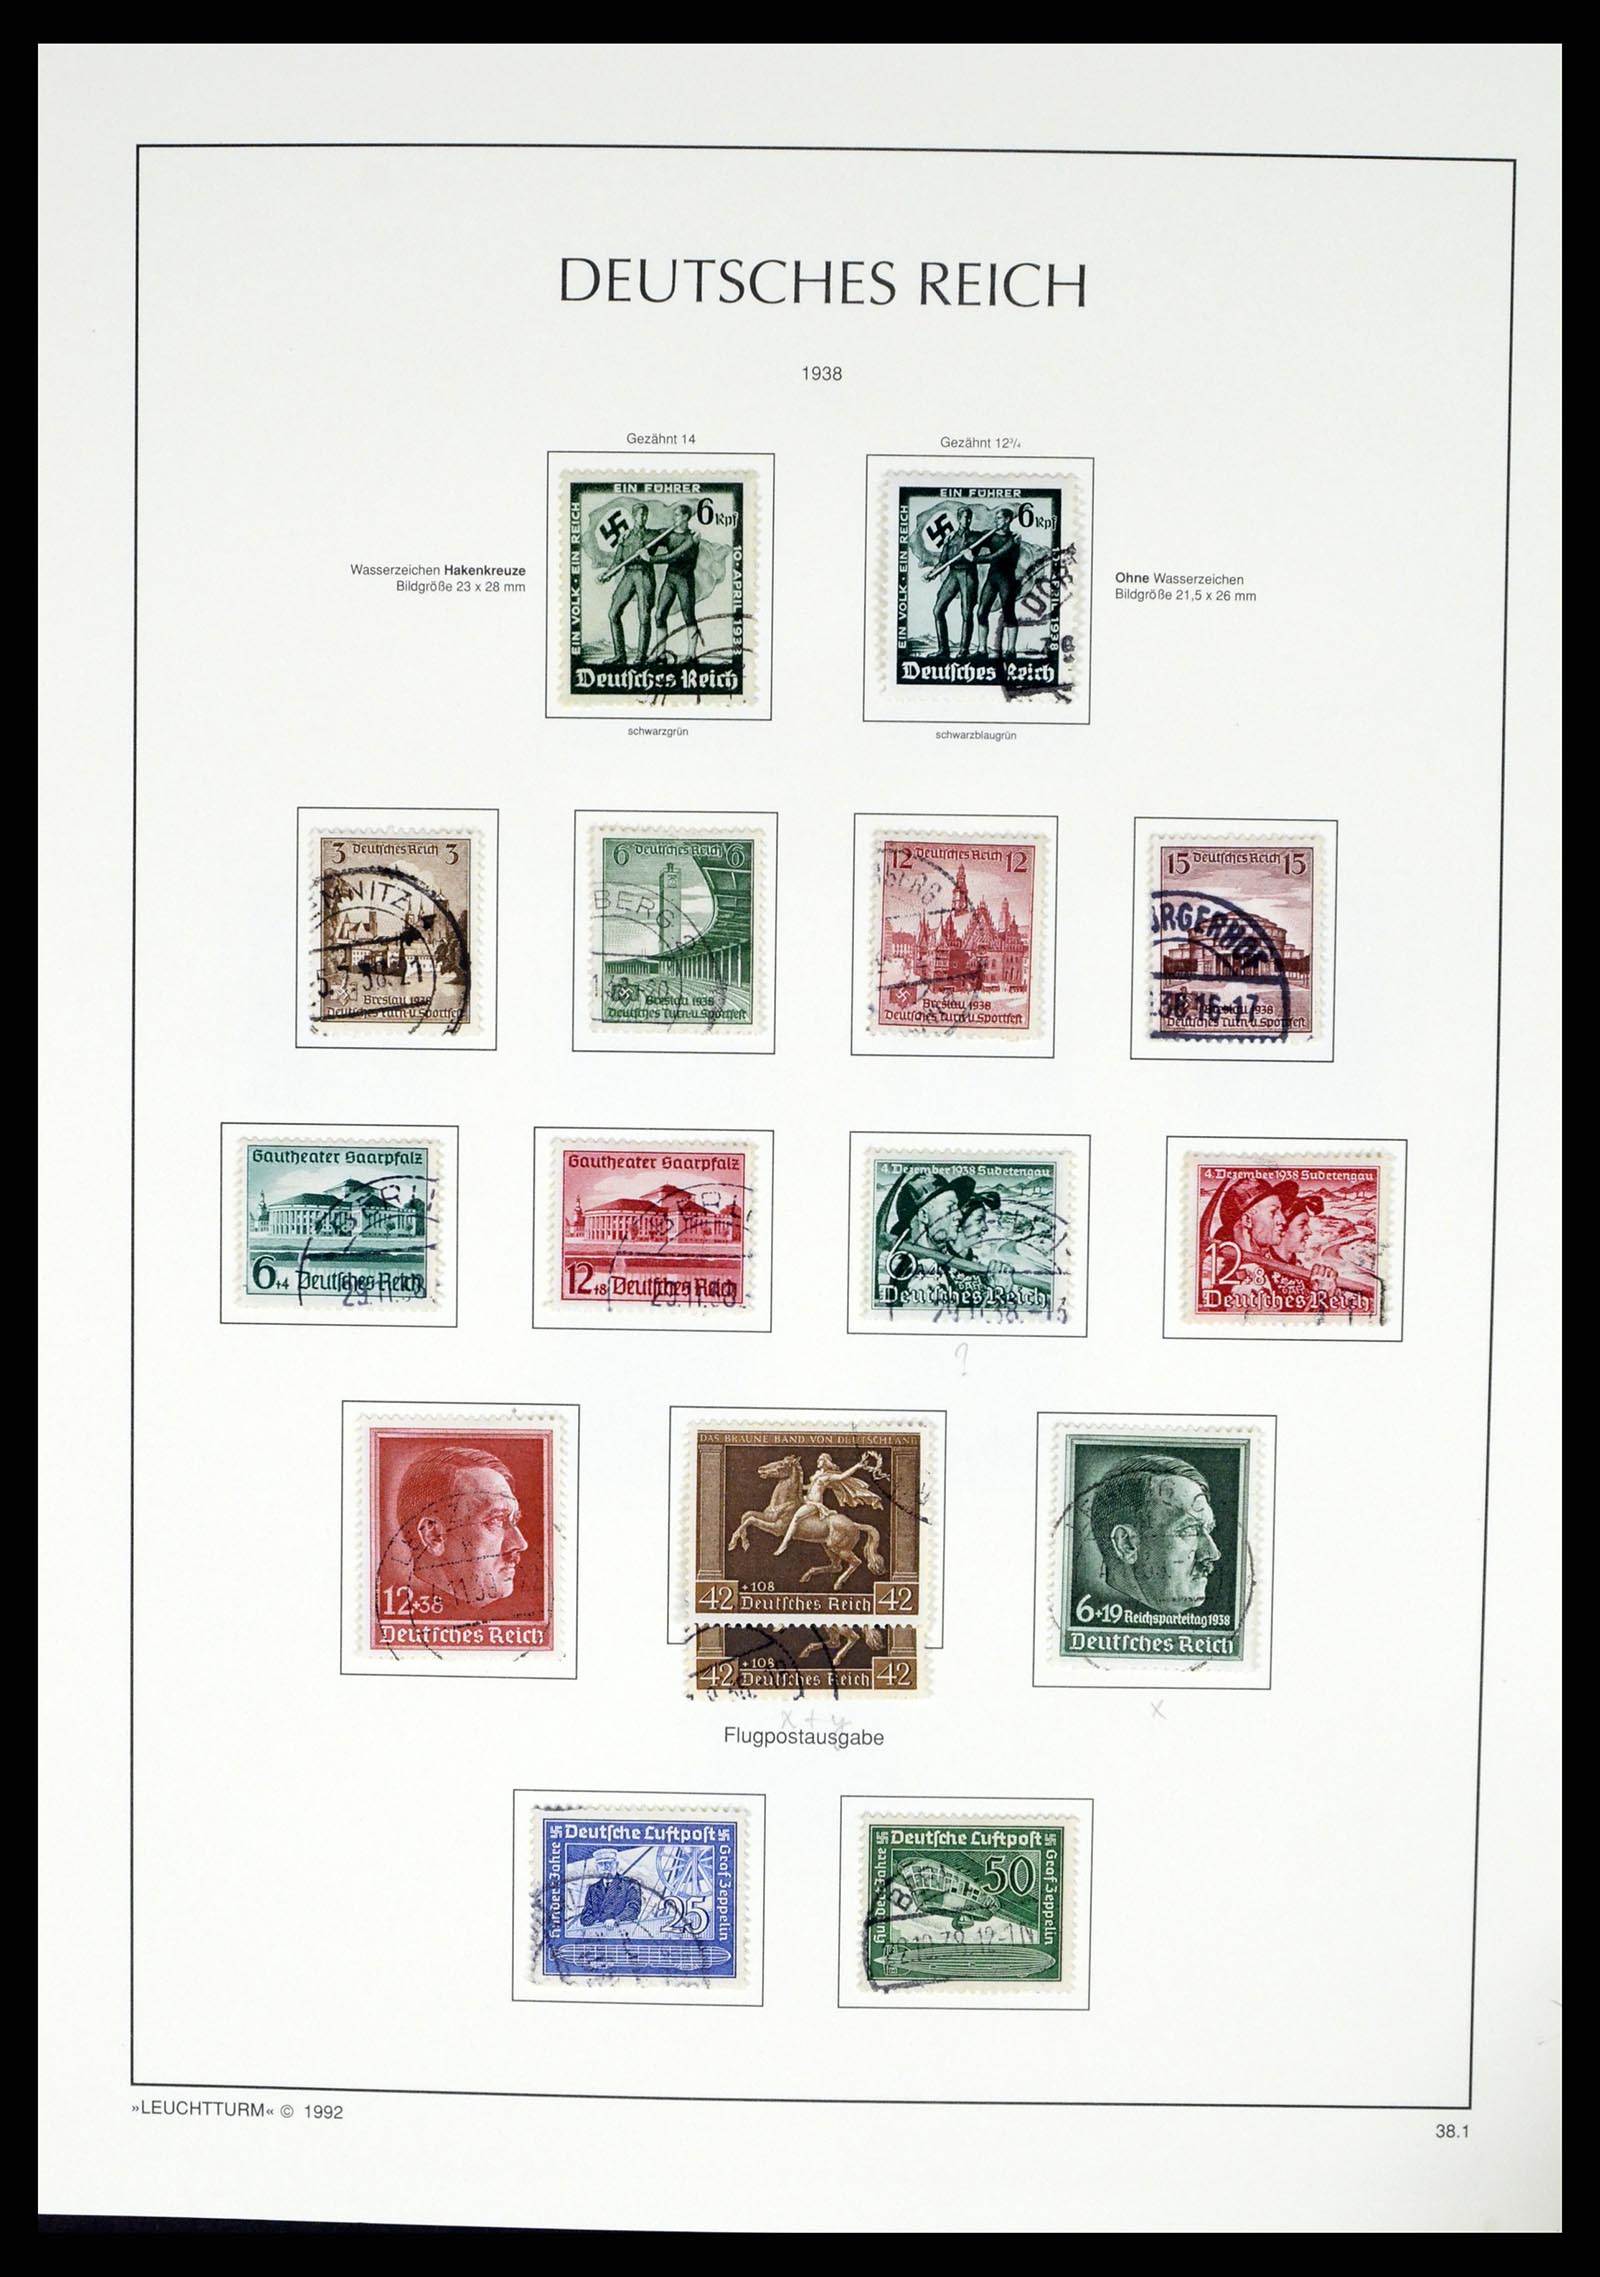 37497 087 - Stamp collection 37497 German Reich 1872-1945.